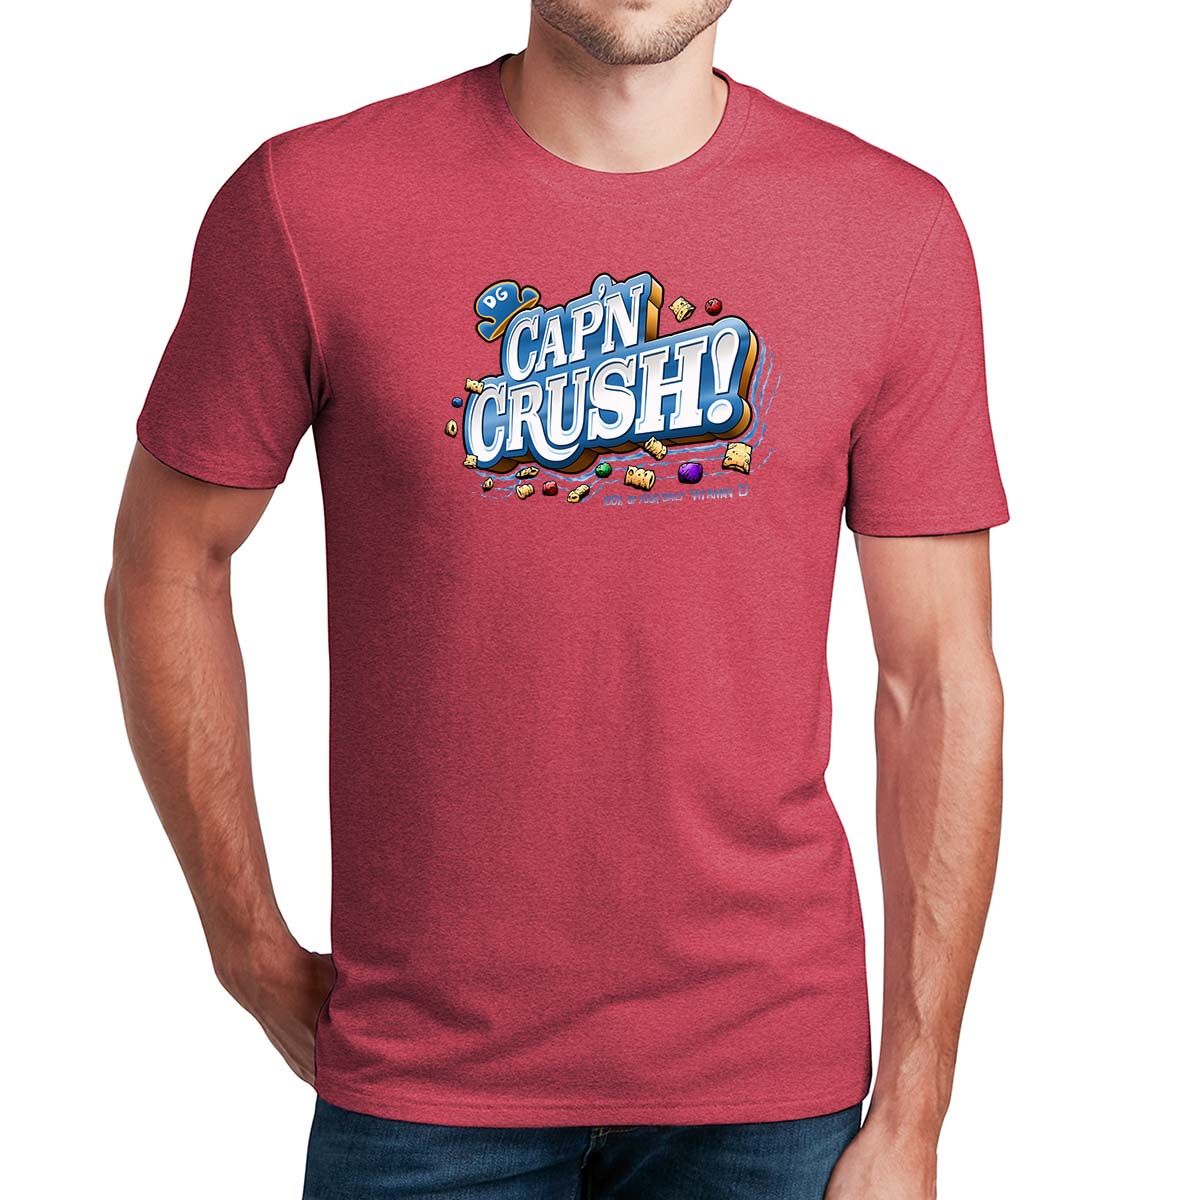 Innova Disc Golf Shirt - Innpress Cap'n Crush Flex Tee